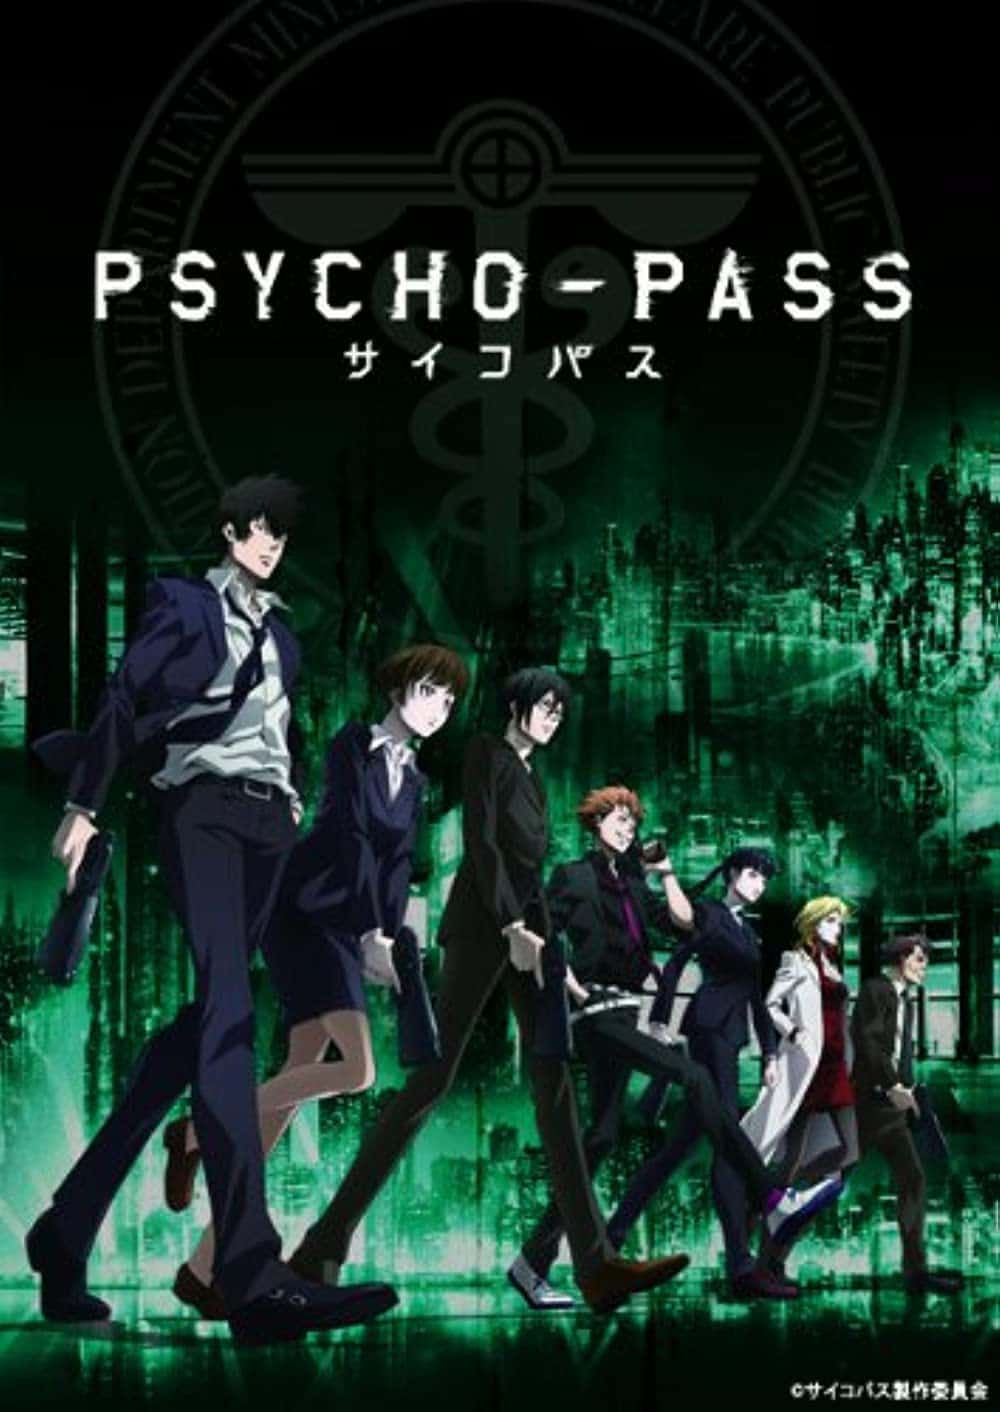 Psycho Pass hd poster